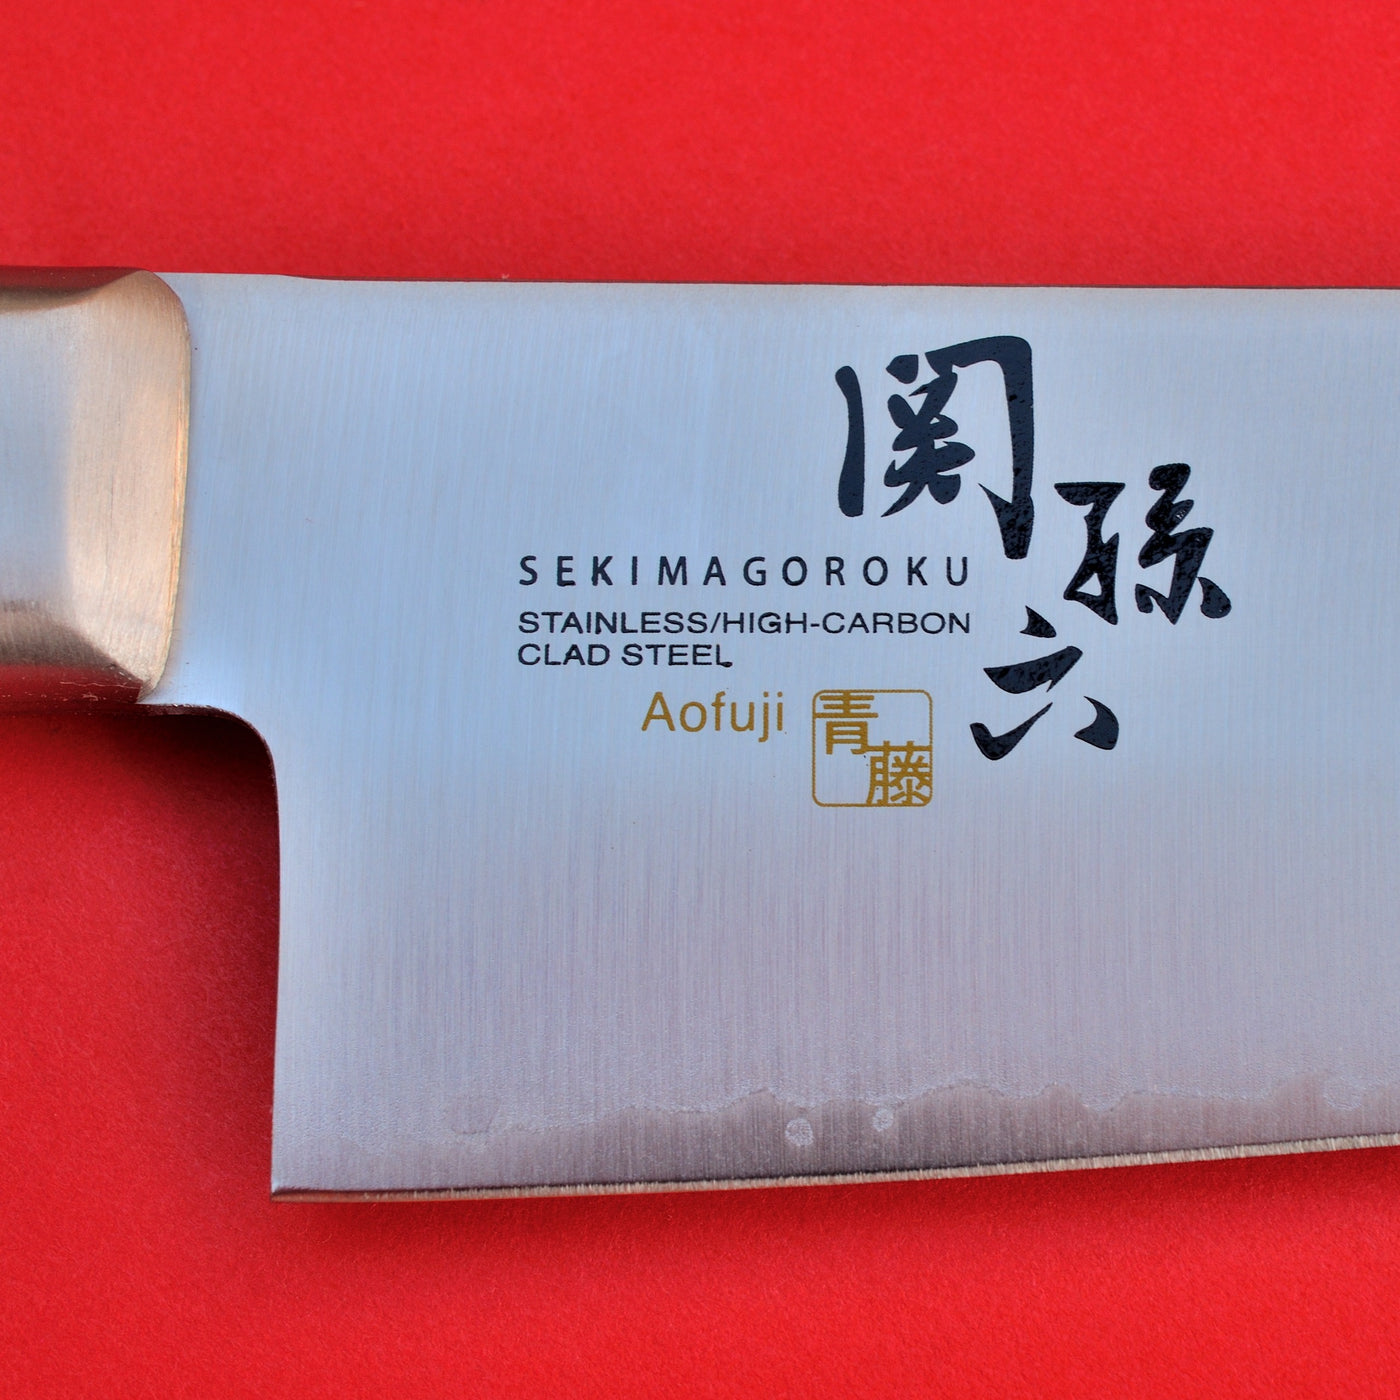 Knife set 4 KAI GYUTO SANTOKU hammered Stainless steel IMAYO Japan